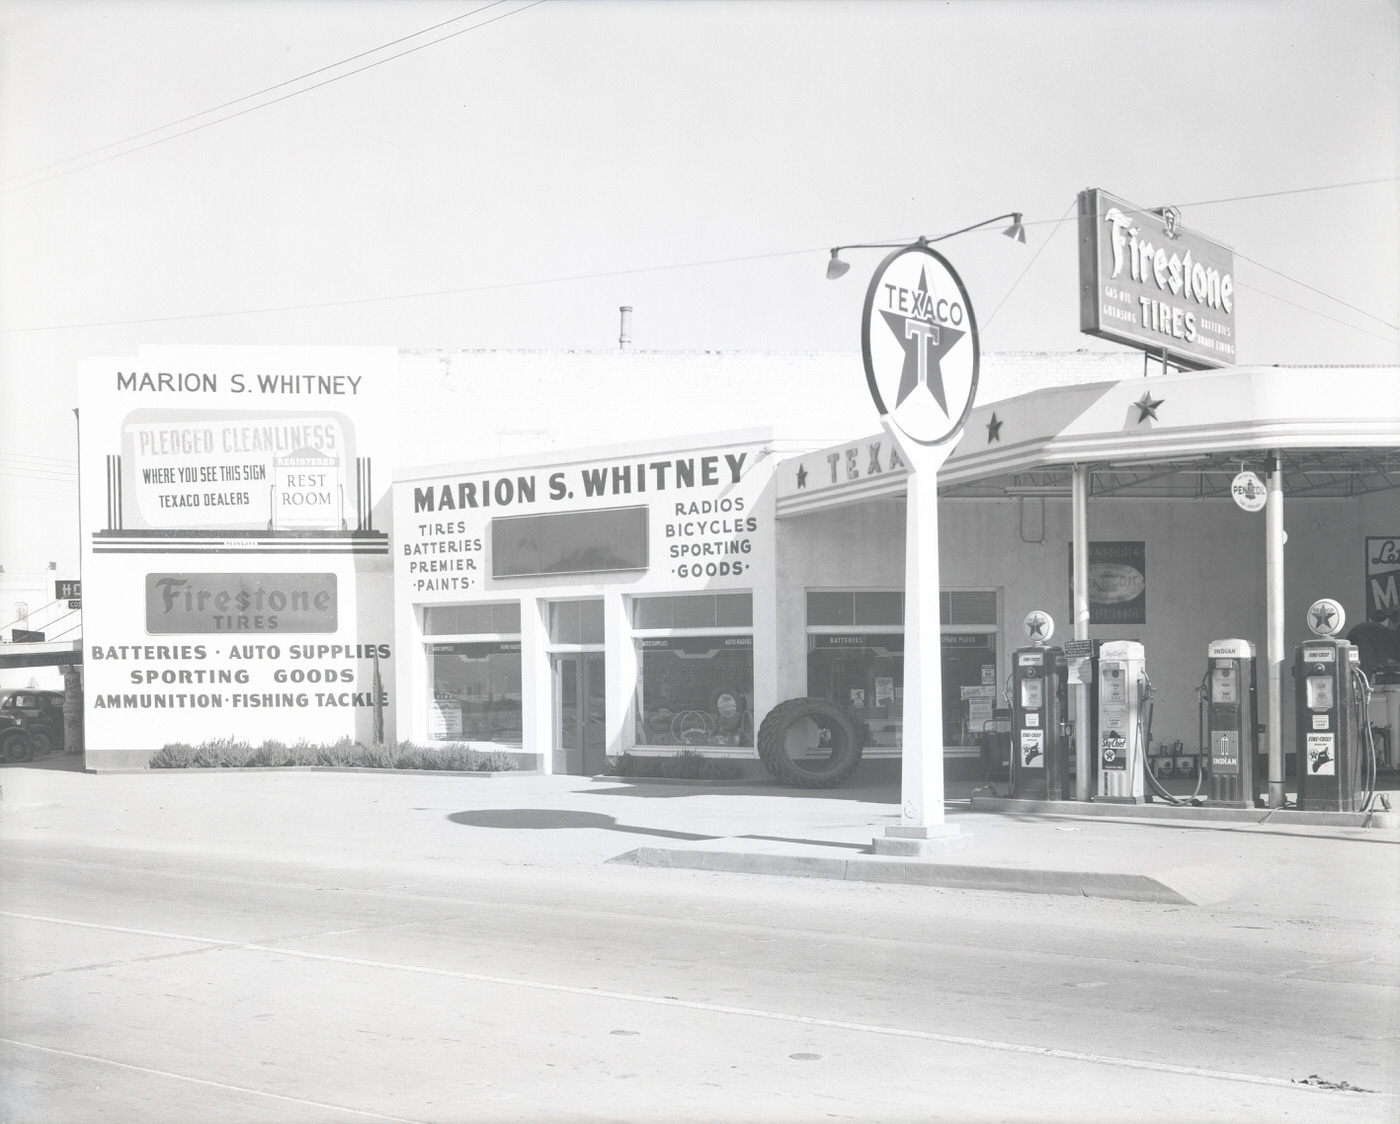 Marion S. Whitney Texaco Station Exterior, 1944